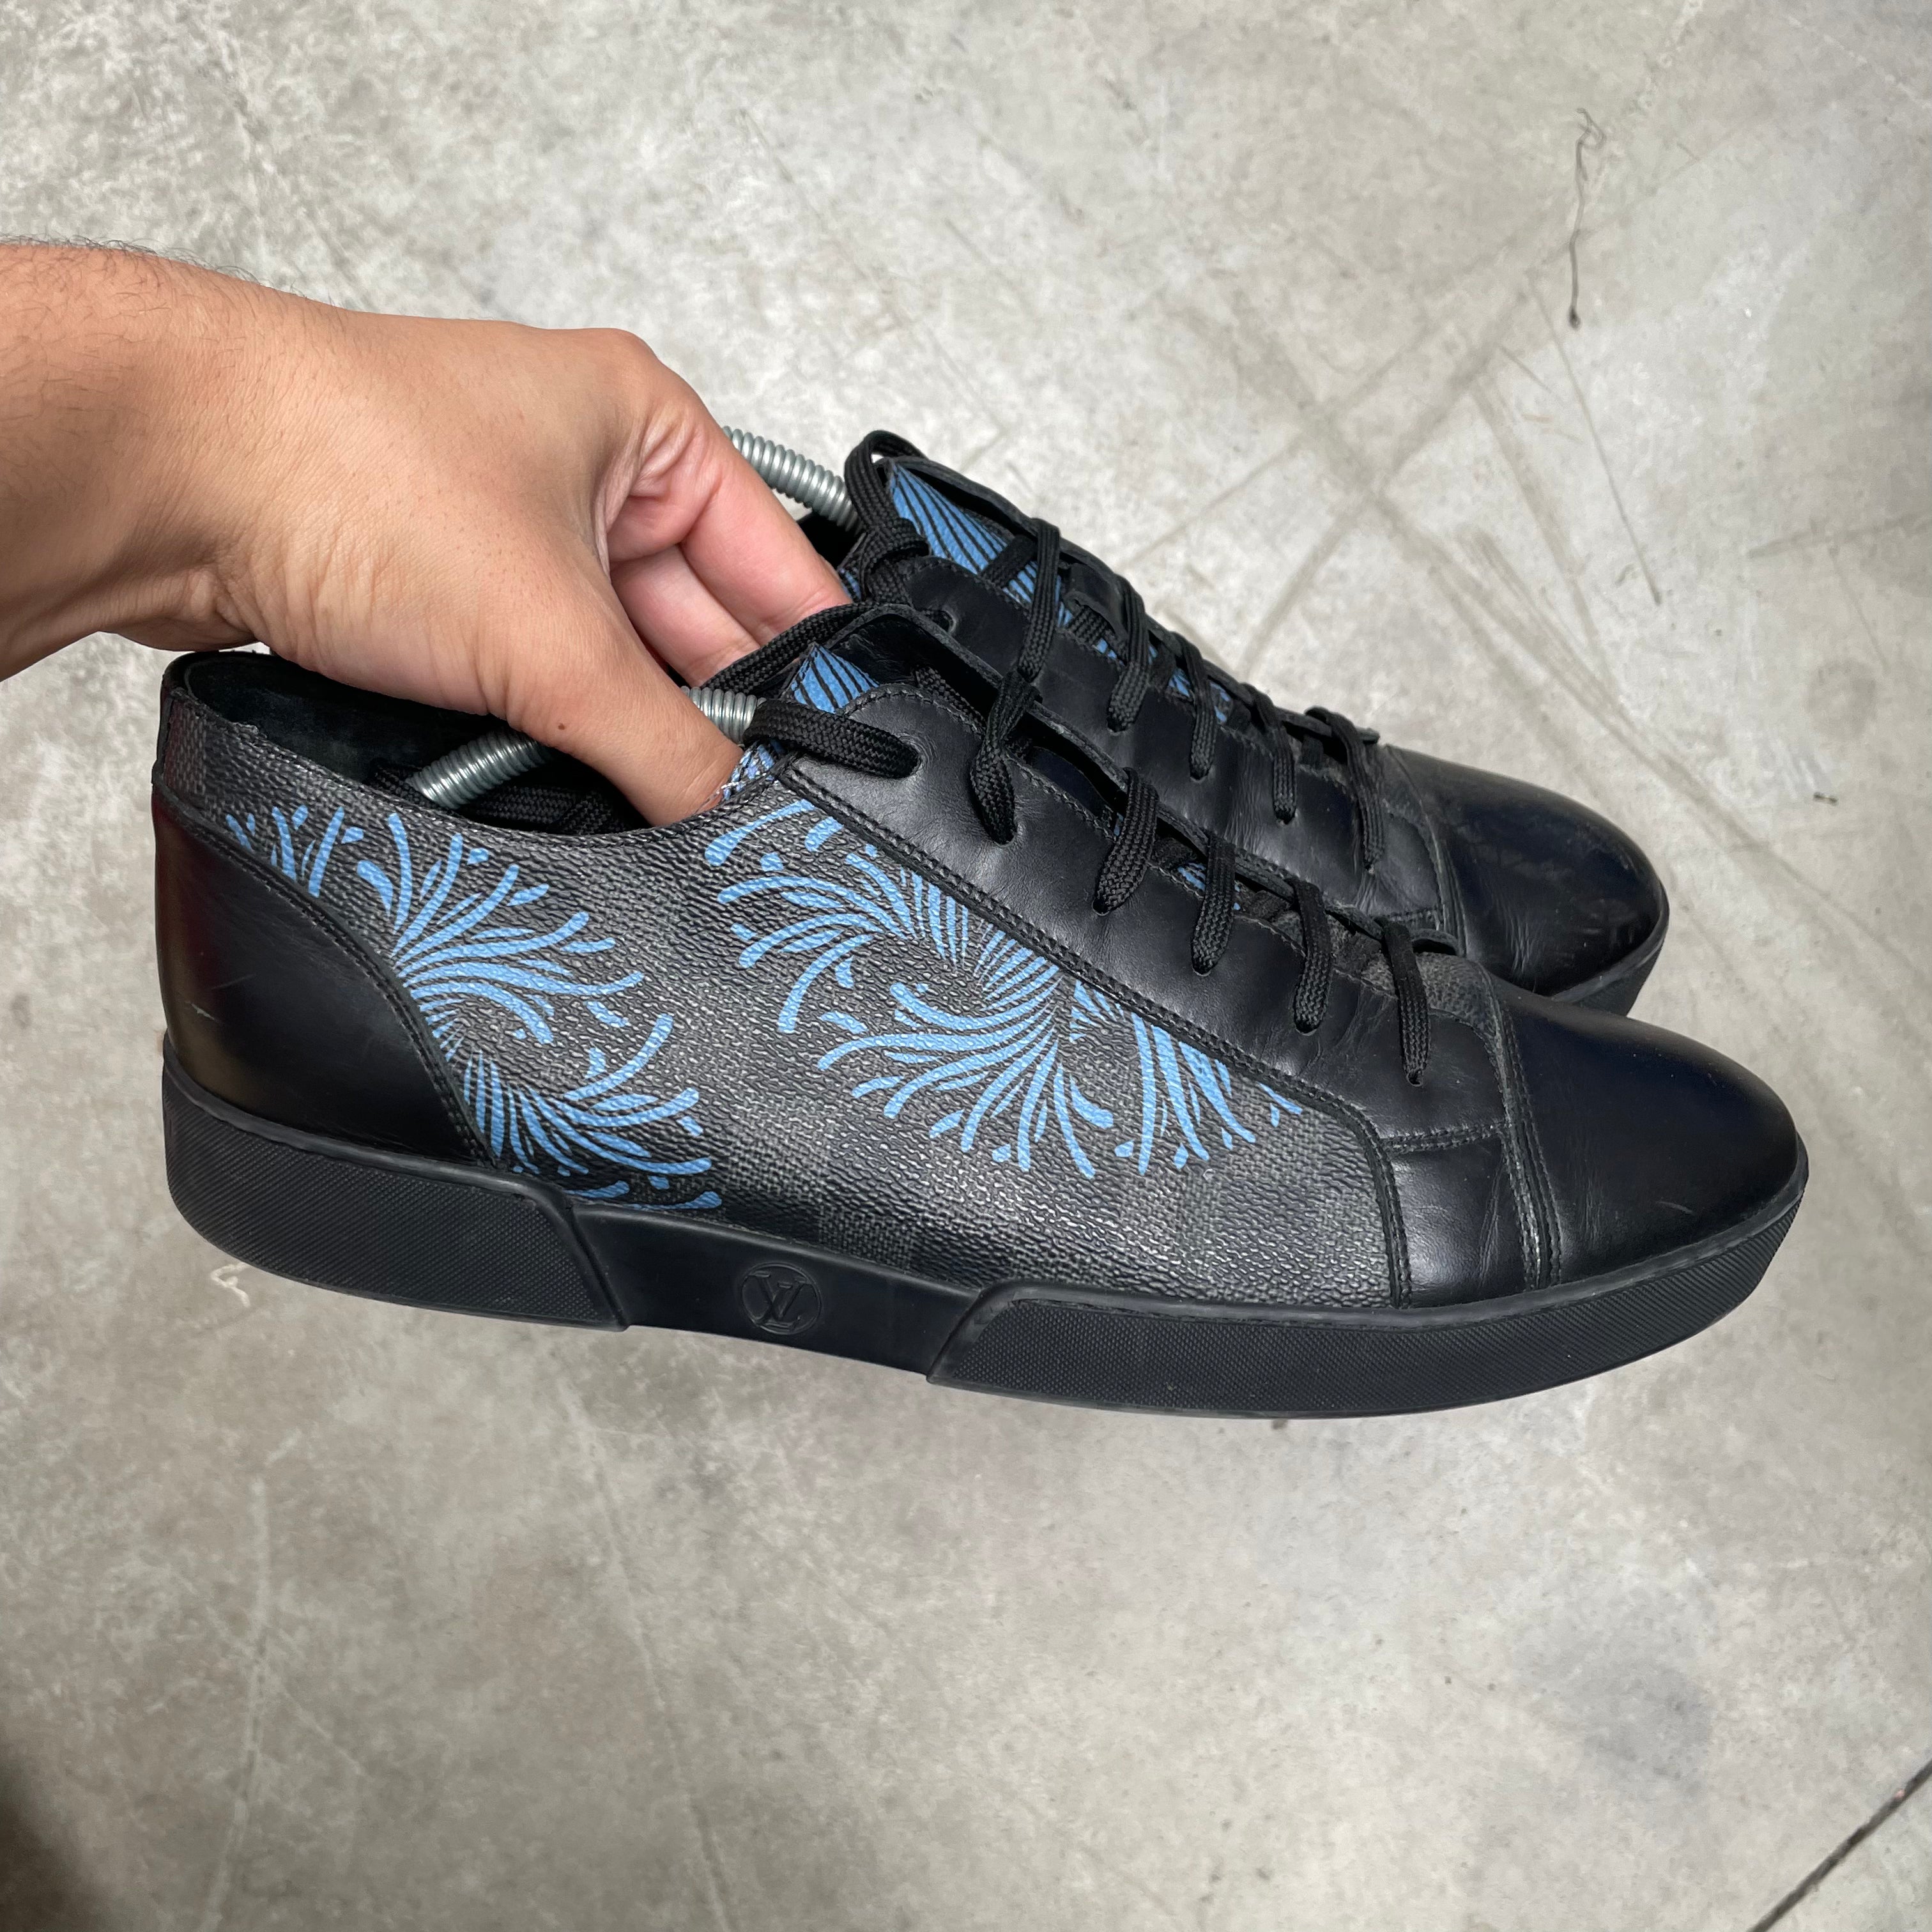 Louis Vuitton Christopher Nemeth Damier Graffiti Sneaker (fits